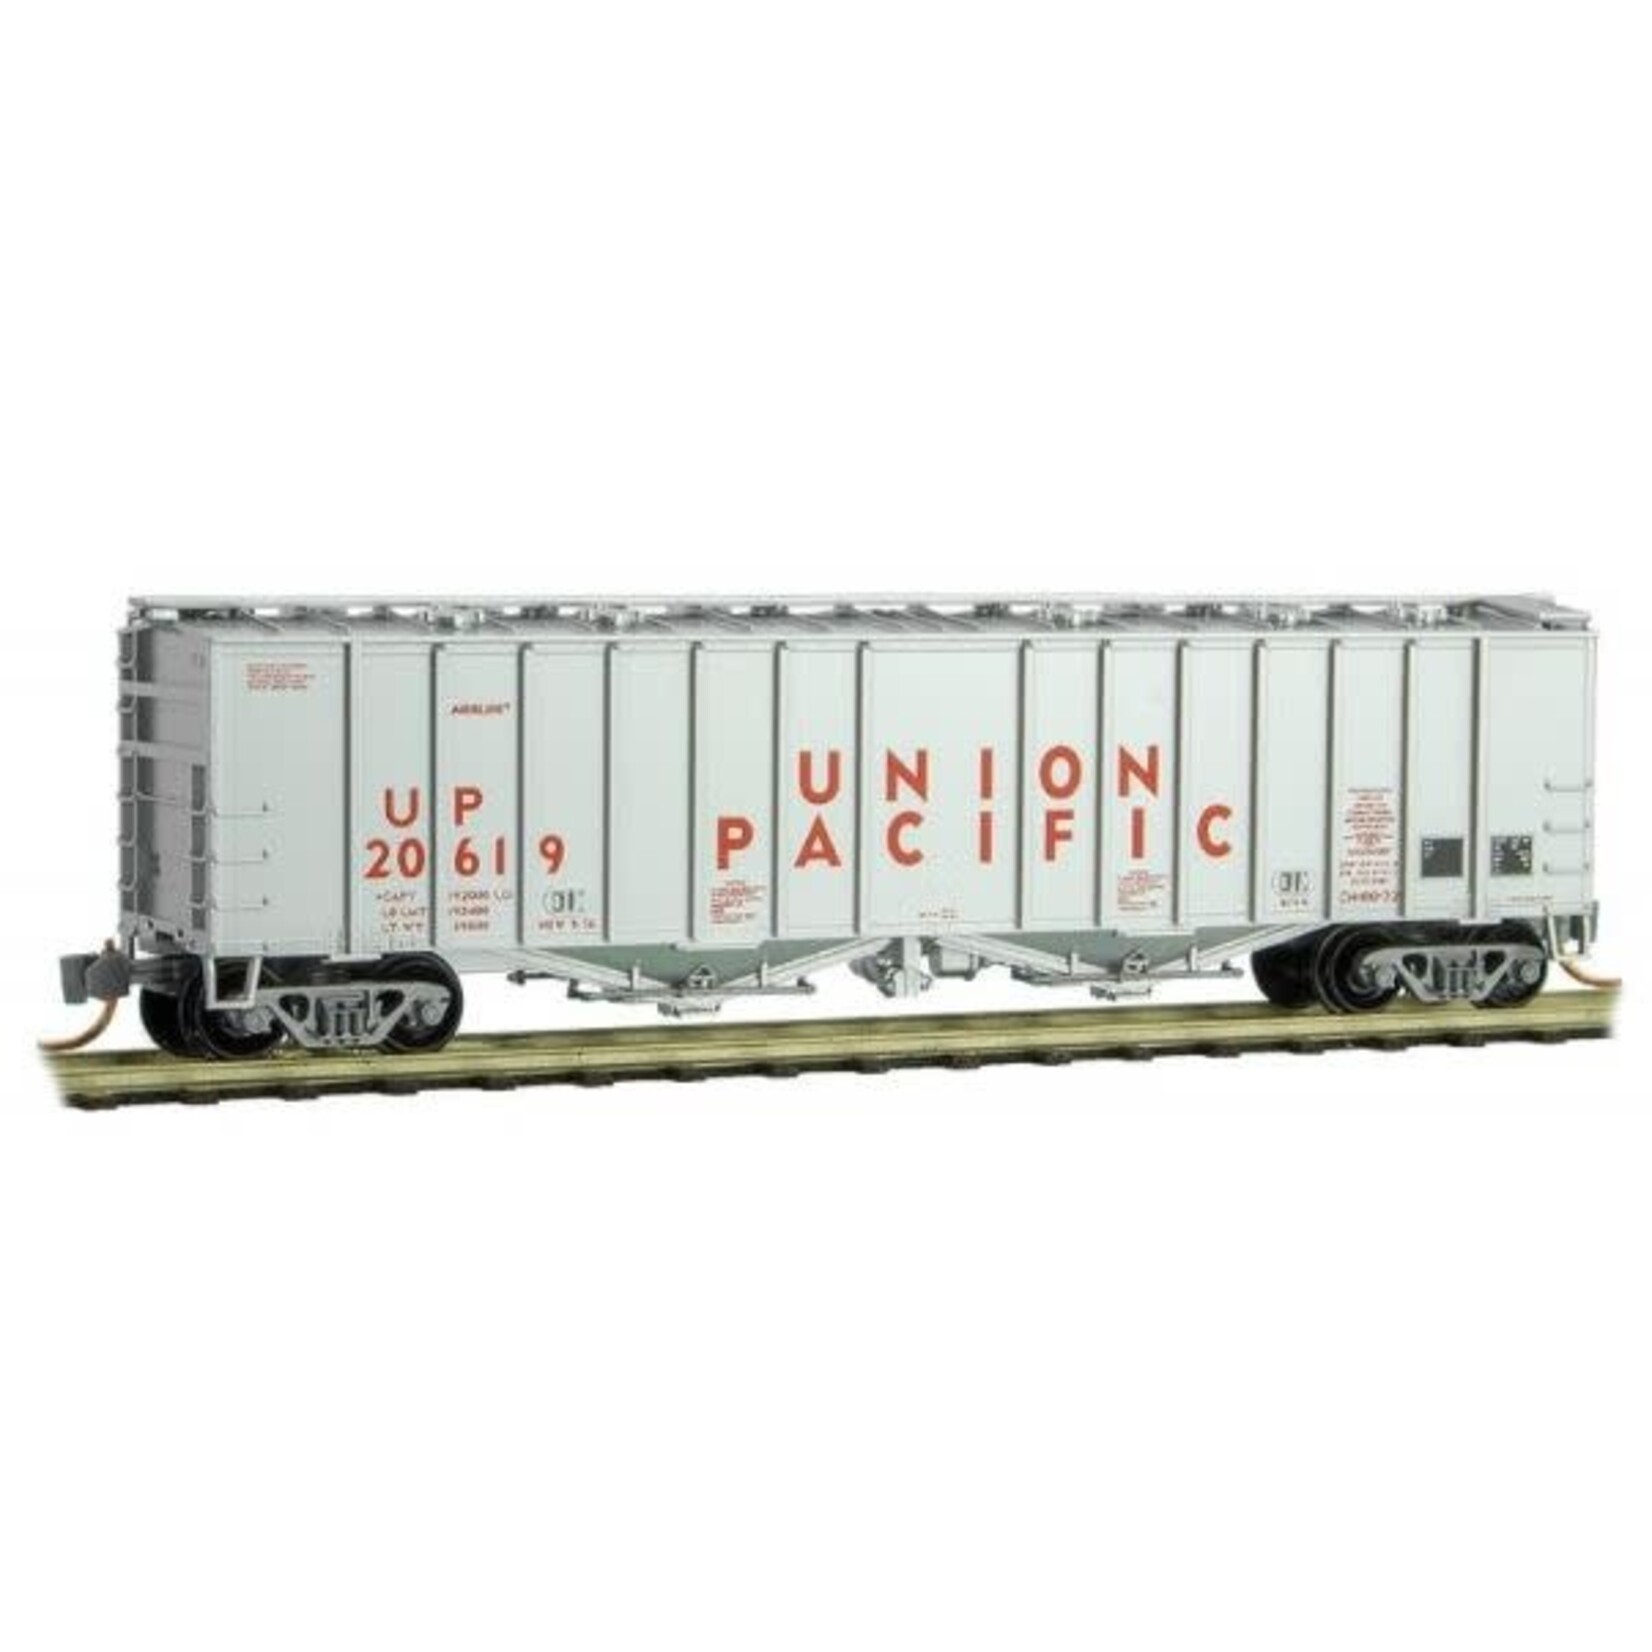 Micro Trains Line 09800051 N Union Pacific - Rd20619